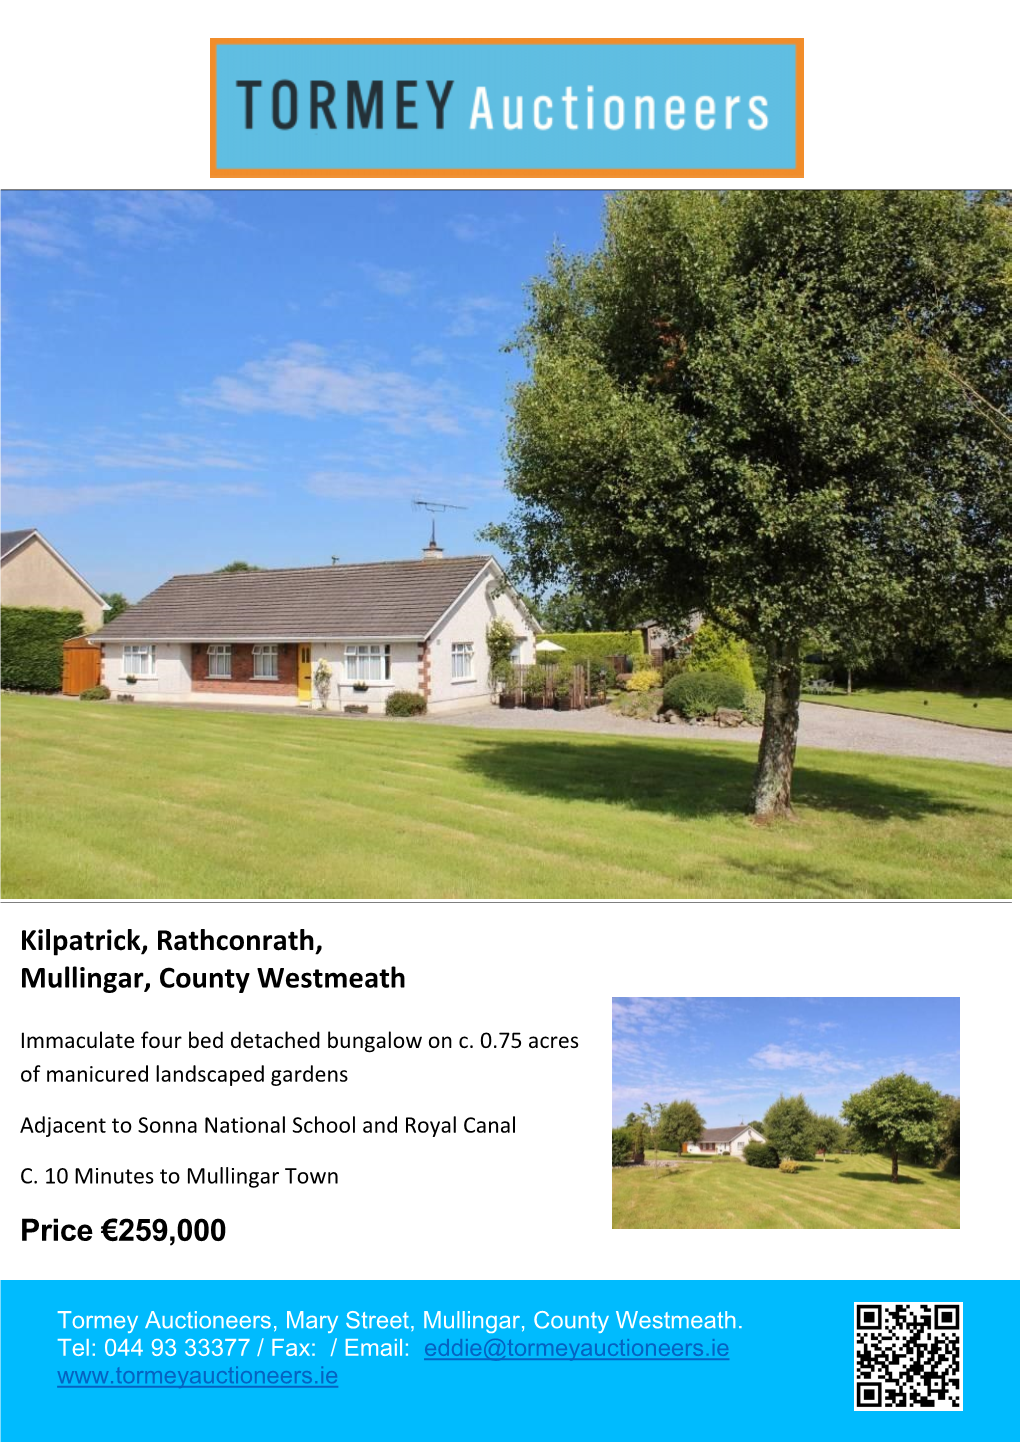 Kilpatrick, Rathconrath, Mullingar, County Westmeath Price €259,000